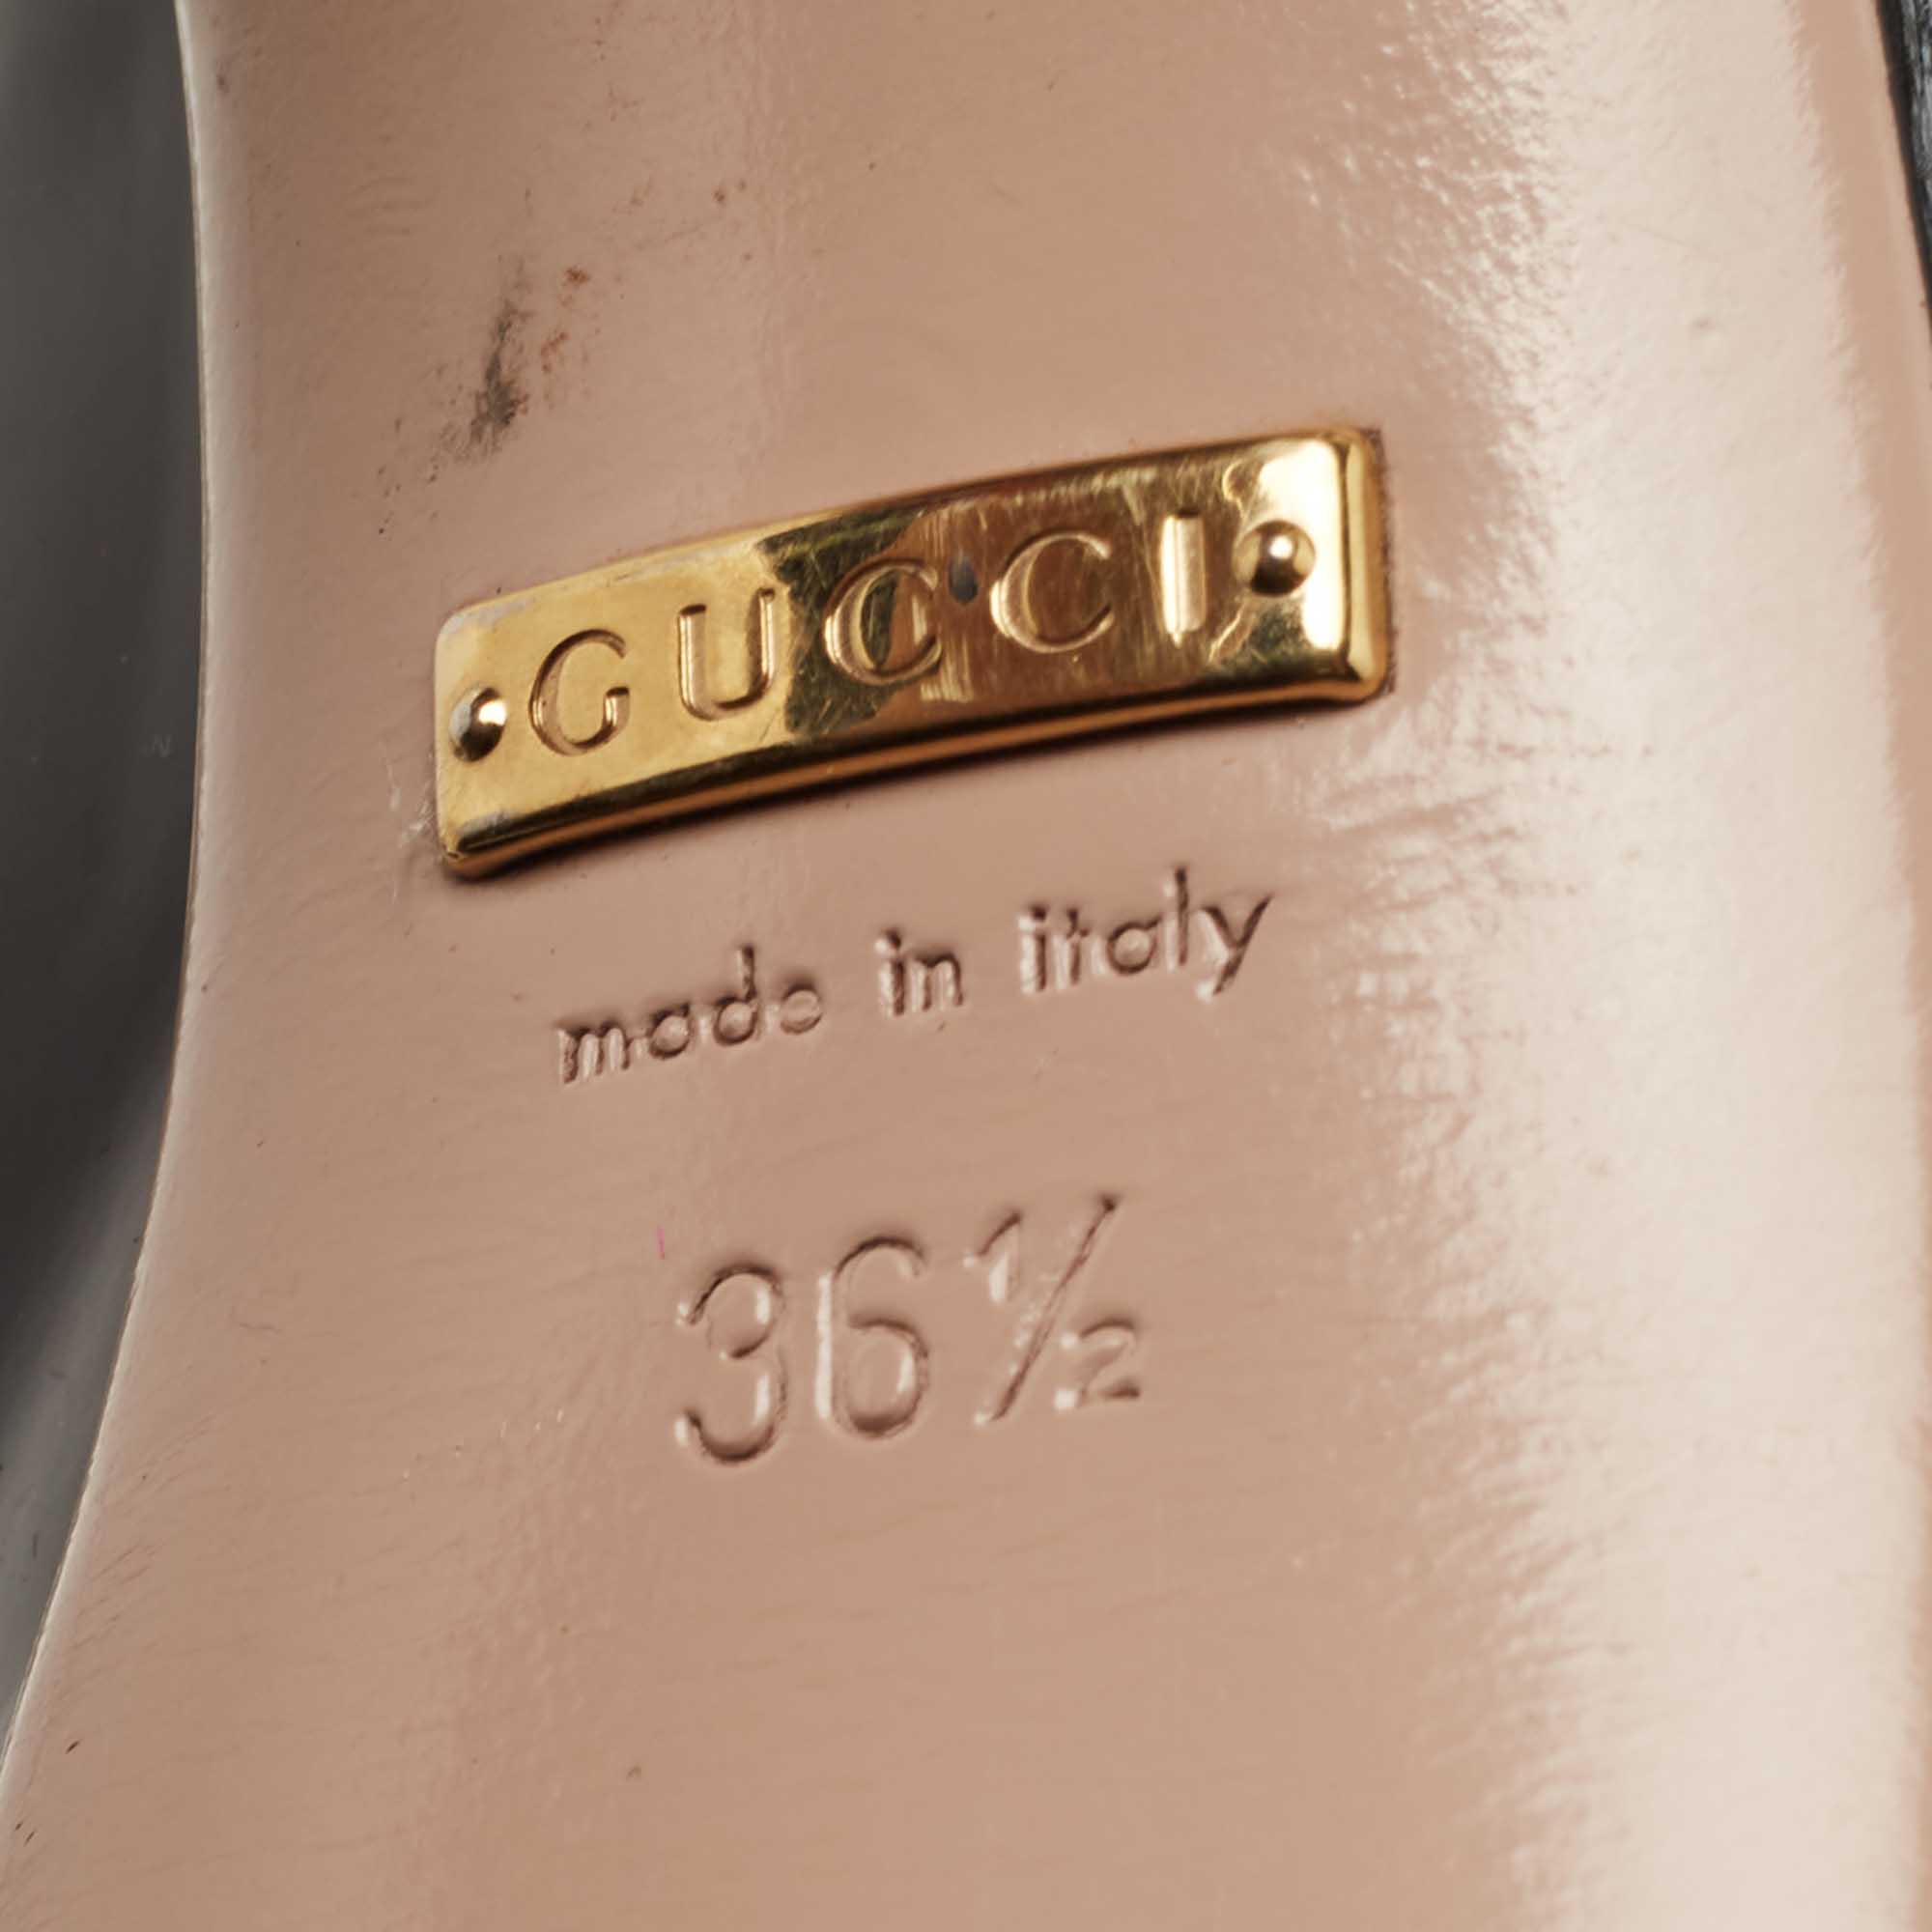 Gucci Black Patent Leather Sofia Pumps Size 36.5